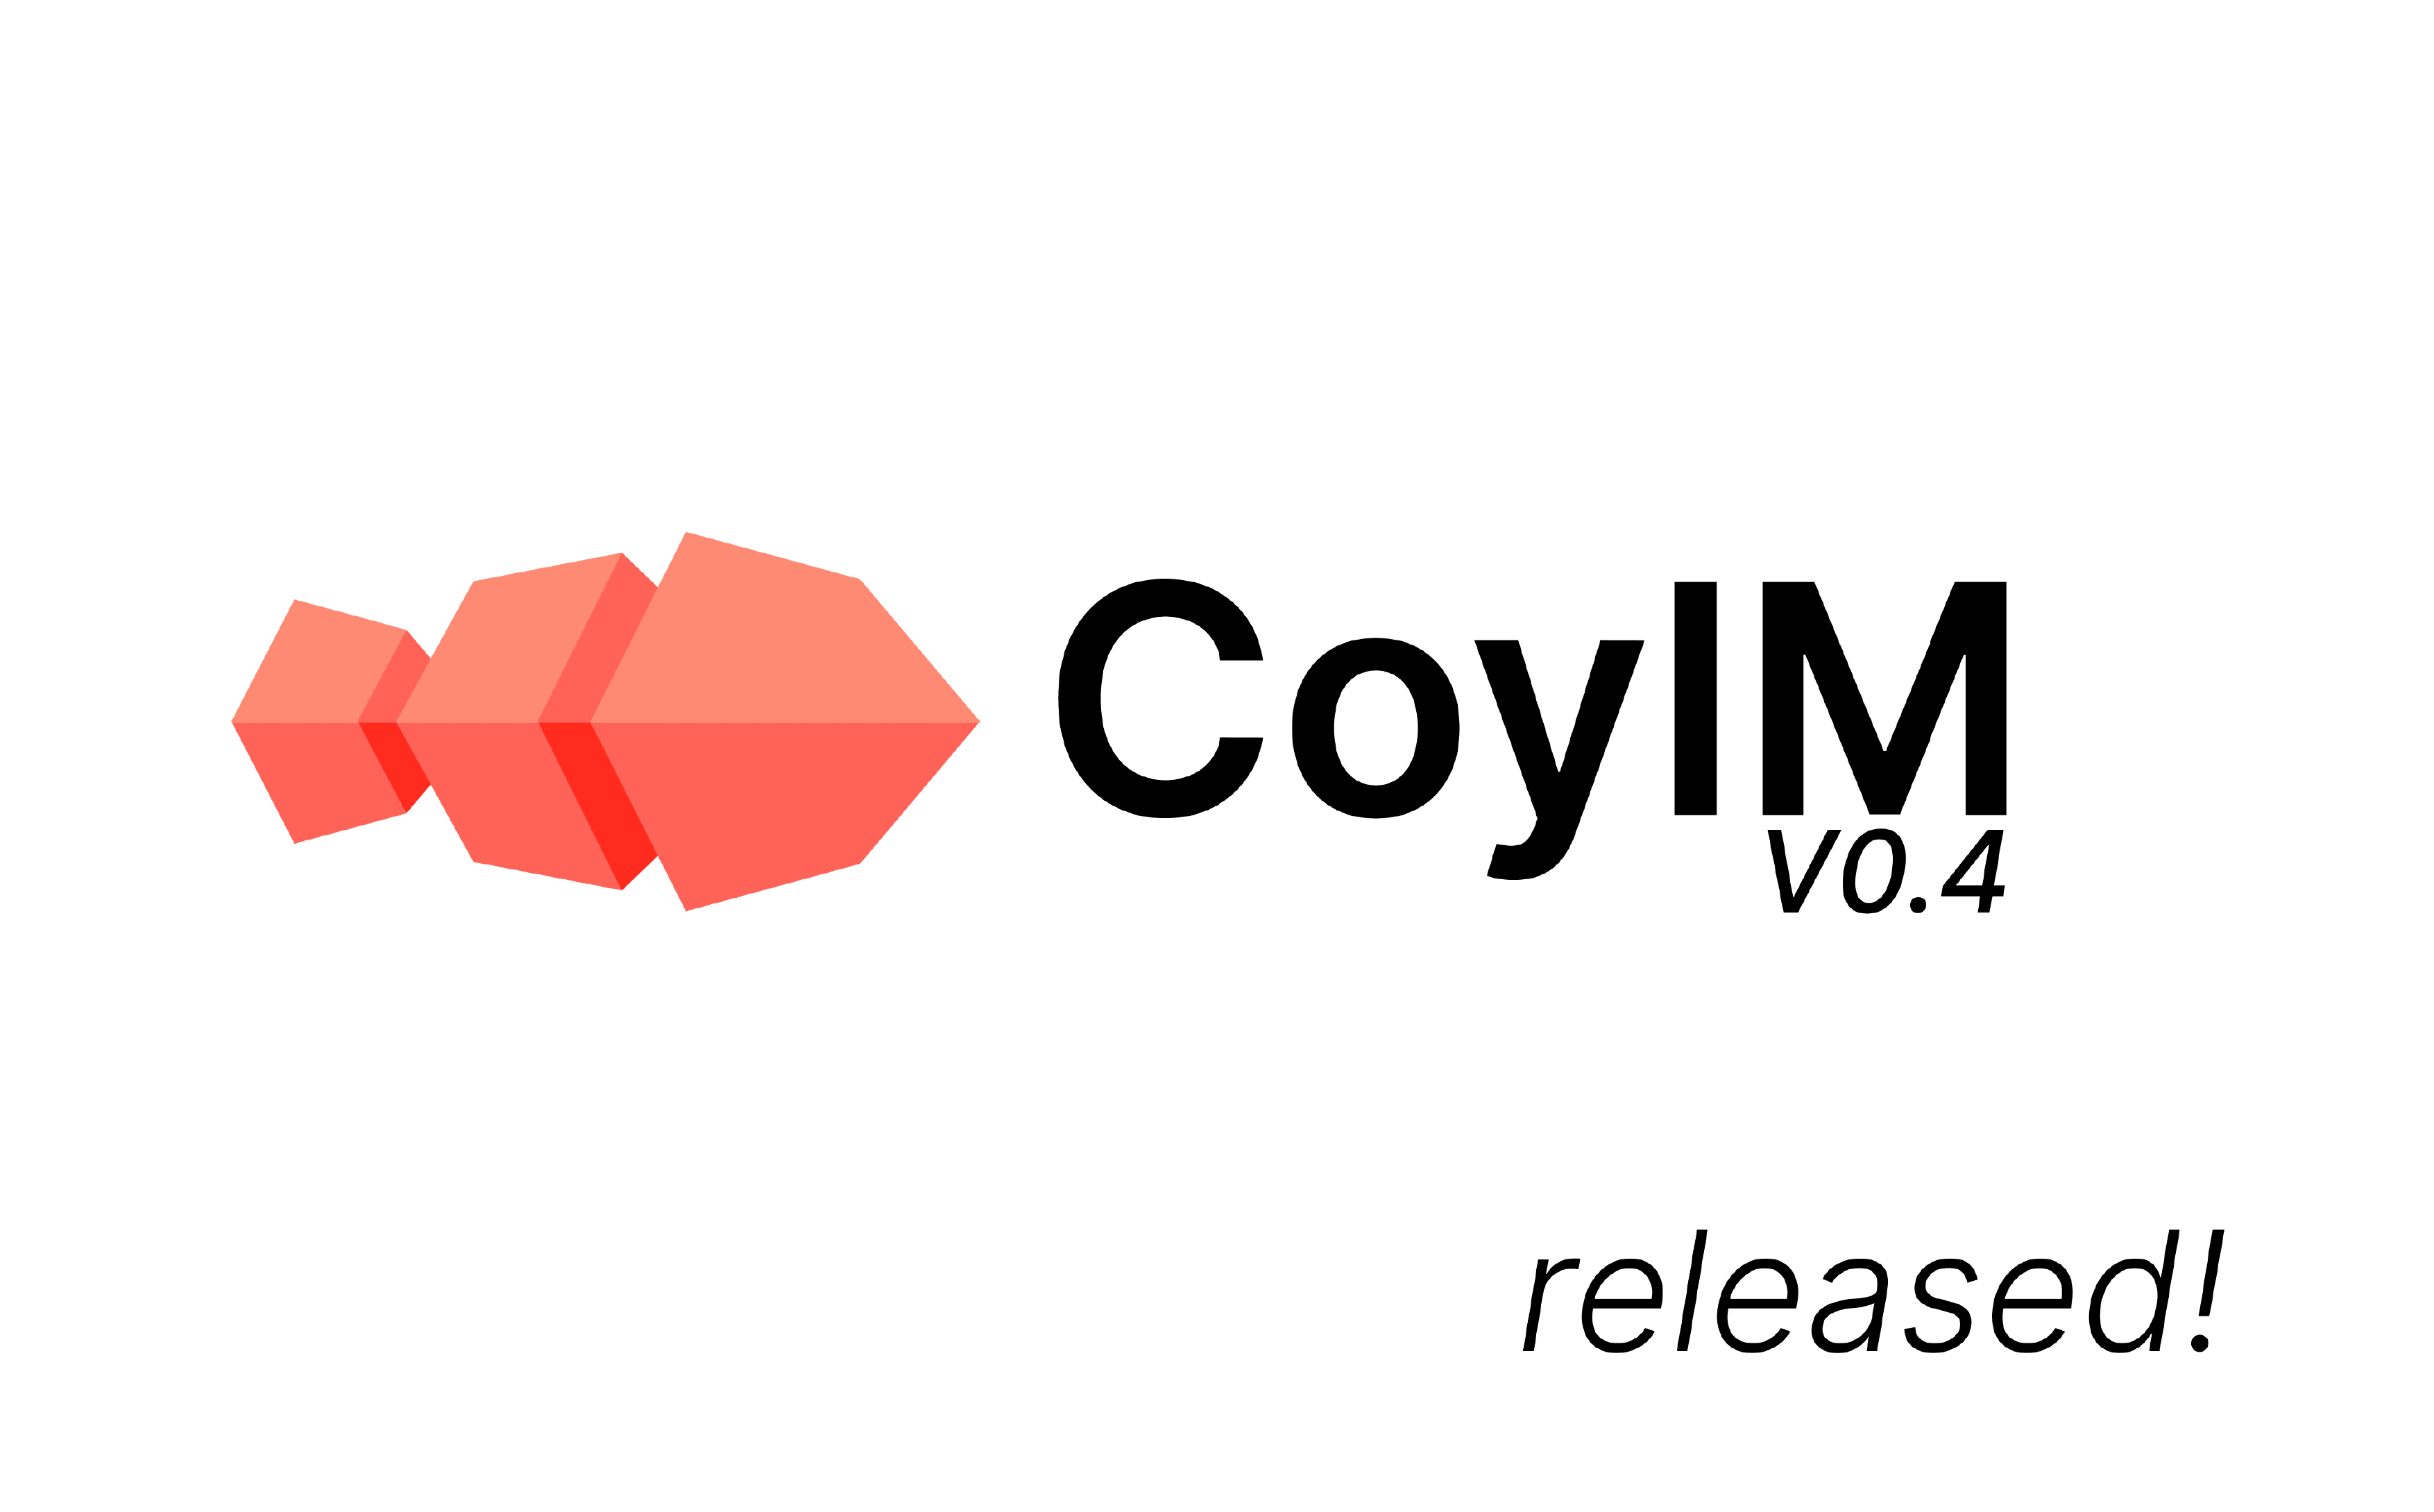 CoyIM v0.4 released!